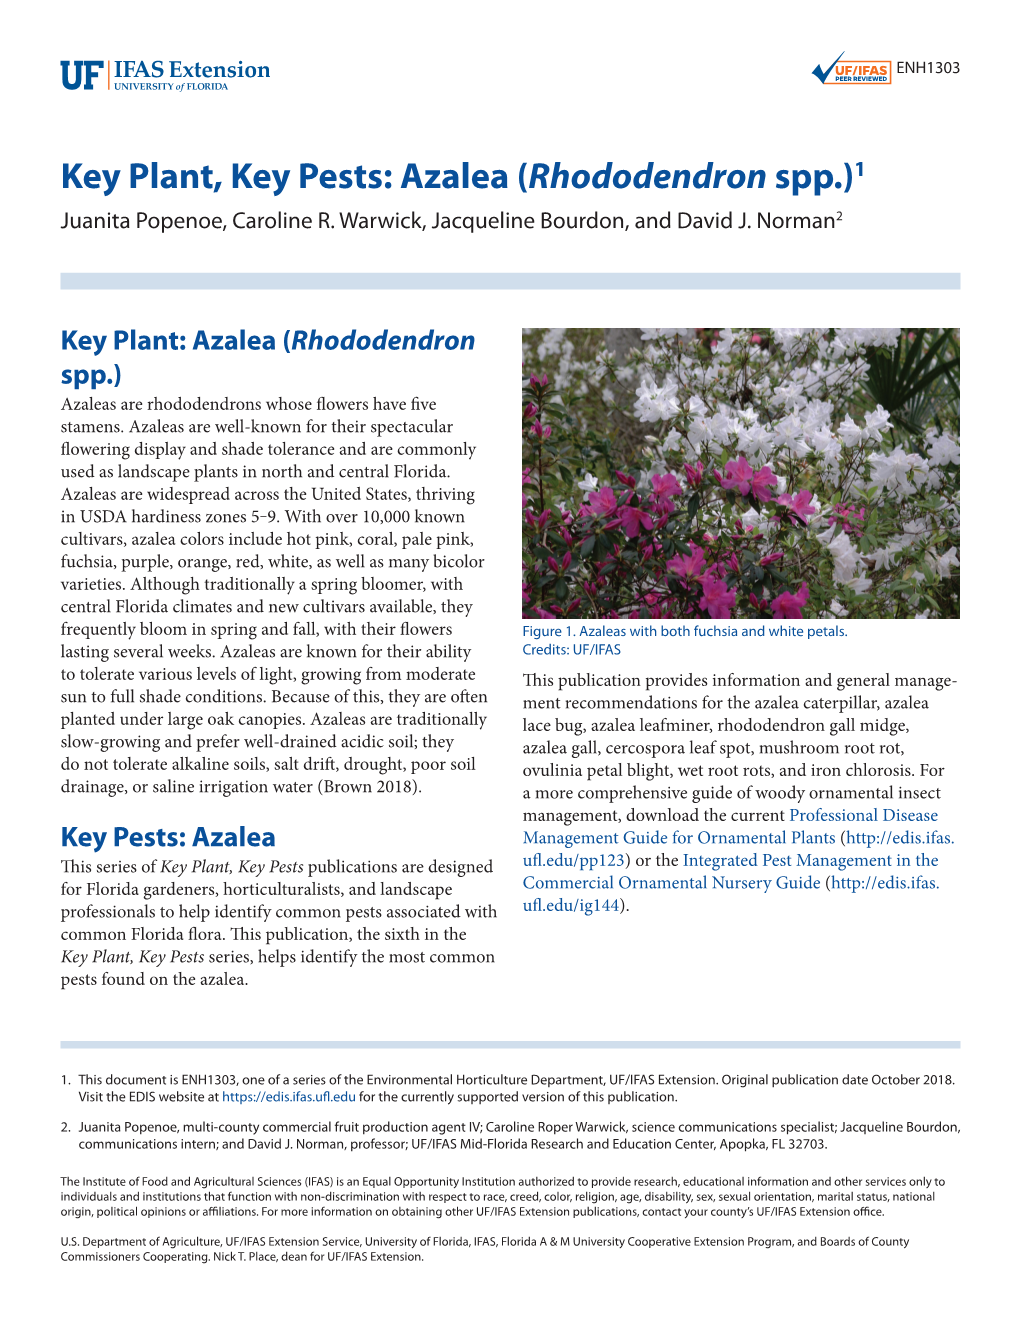 Key Plant, Key Pests: Azalea (Rhododendron Spp.)1 Juanita Popenoe, Caroline R